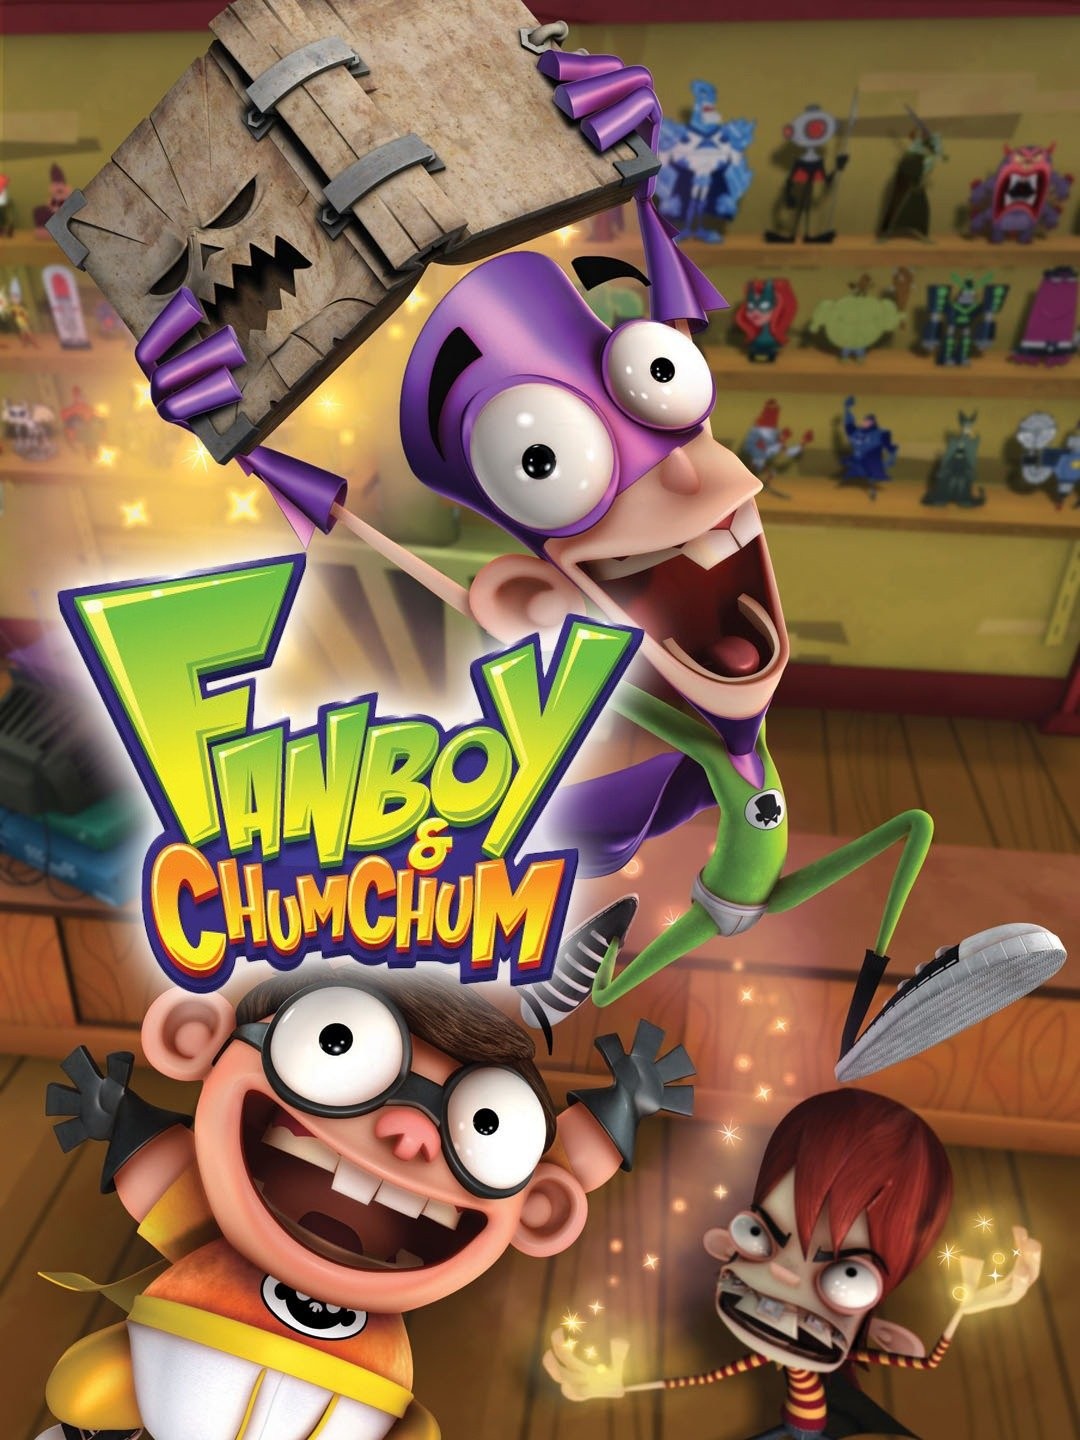 Fanboy & Chum Chum - Rotten Tomatoes